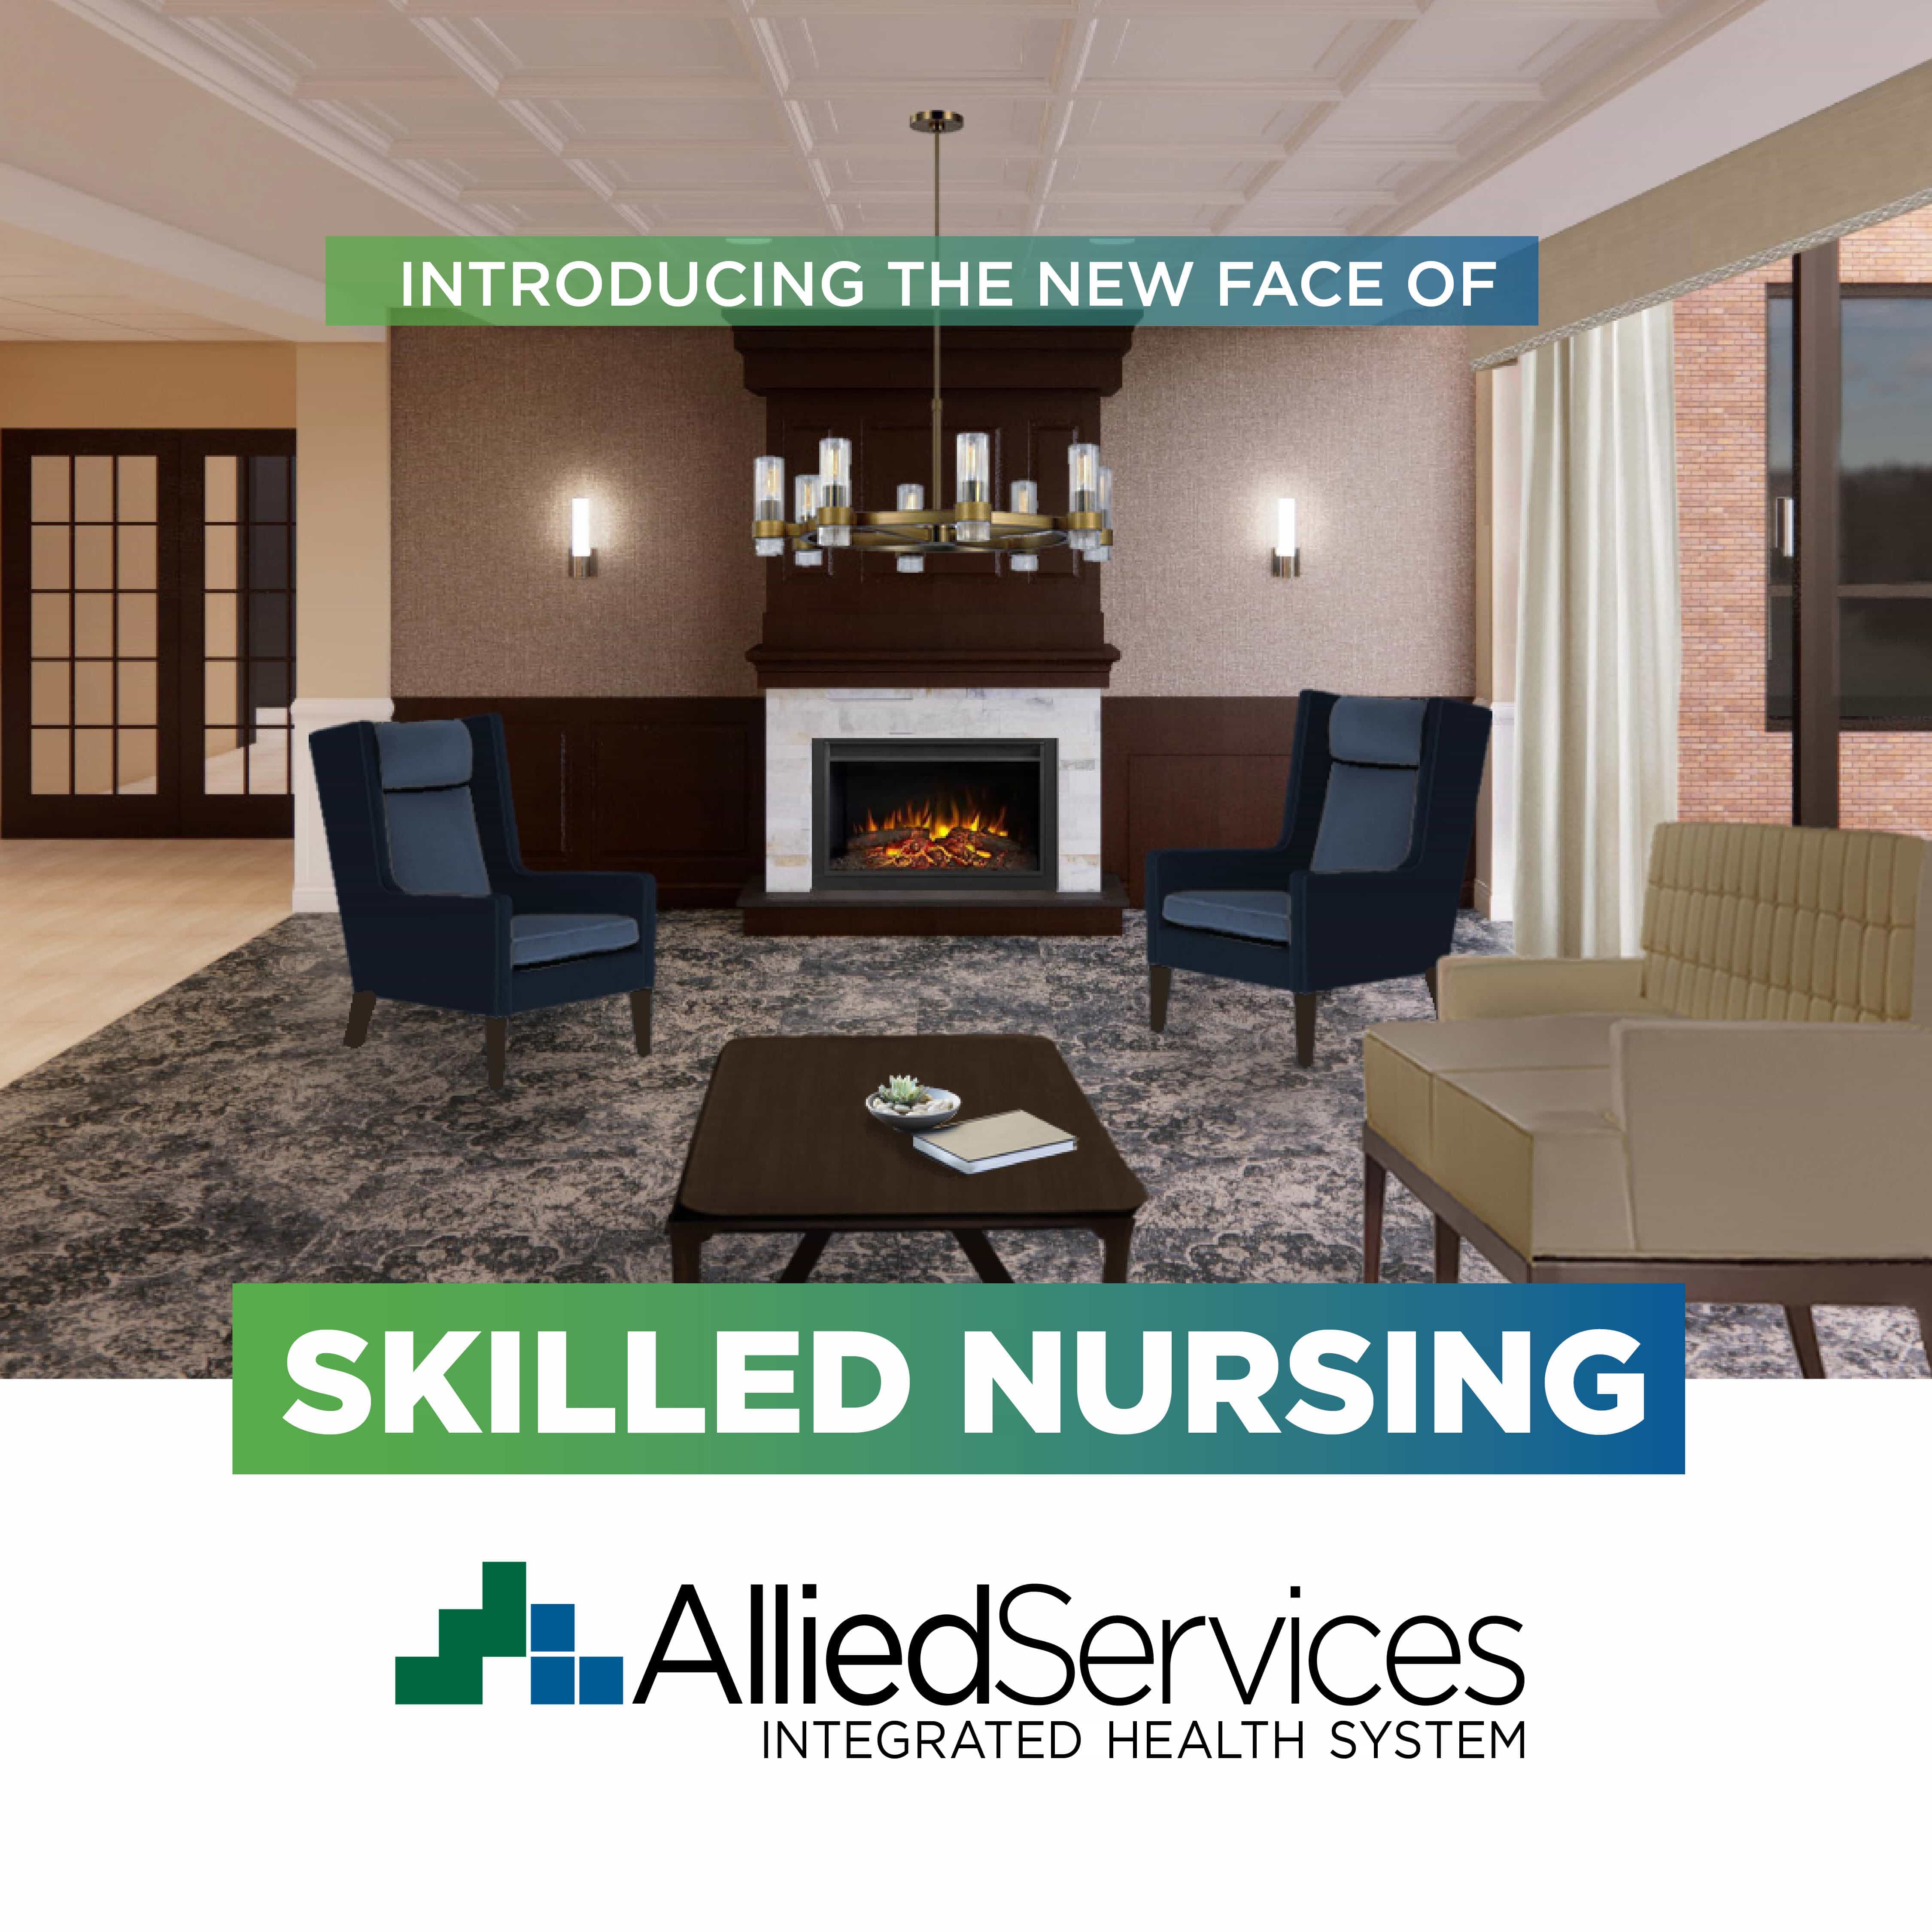 Skilled Nursing Care, Highlights